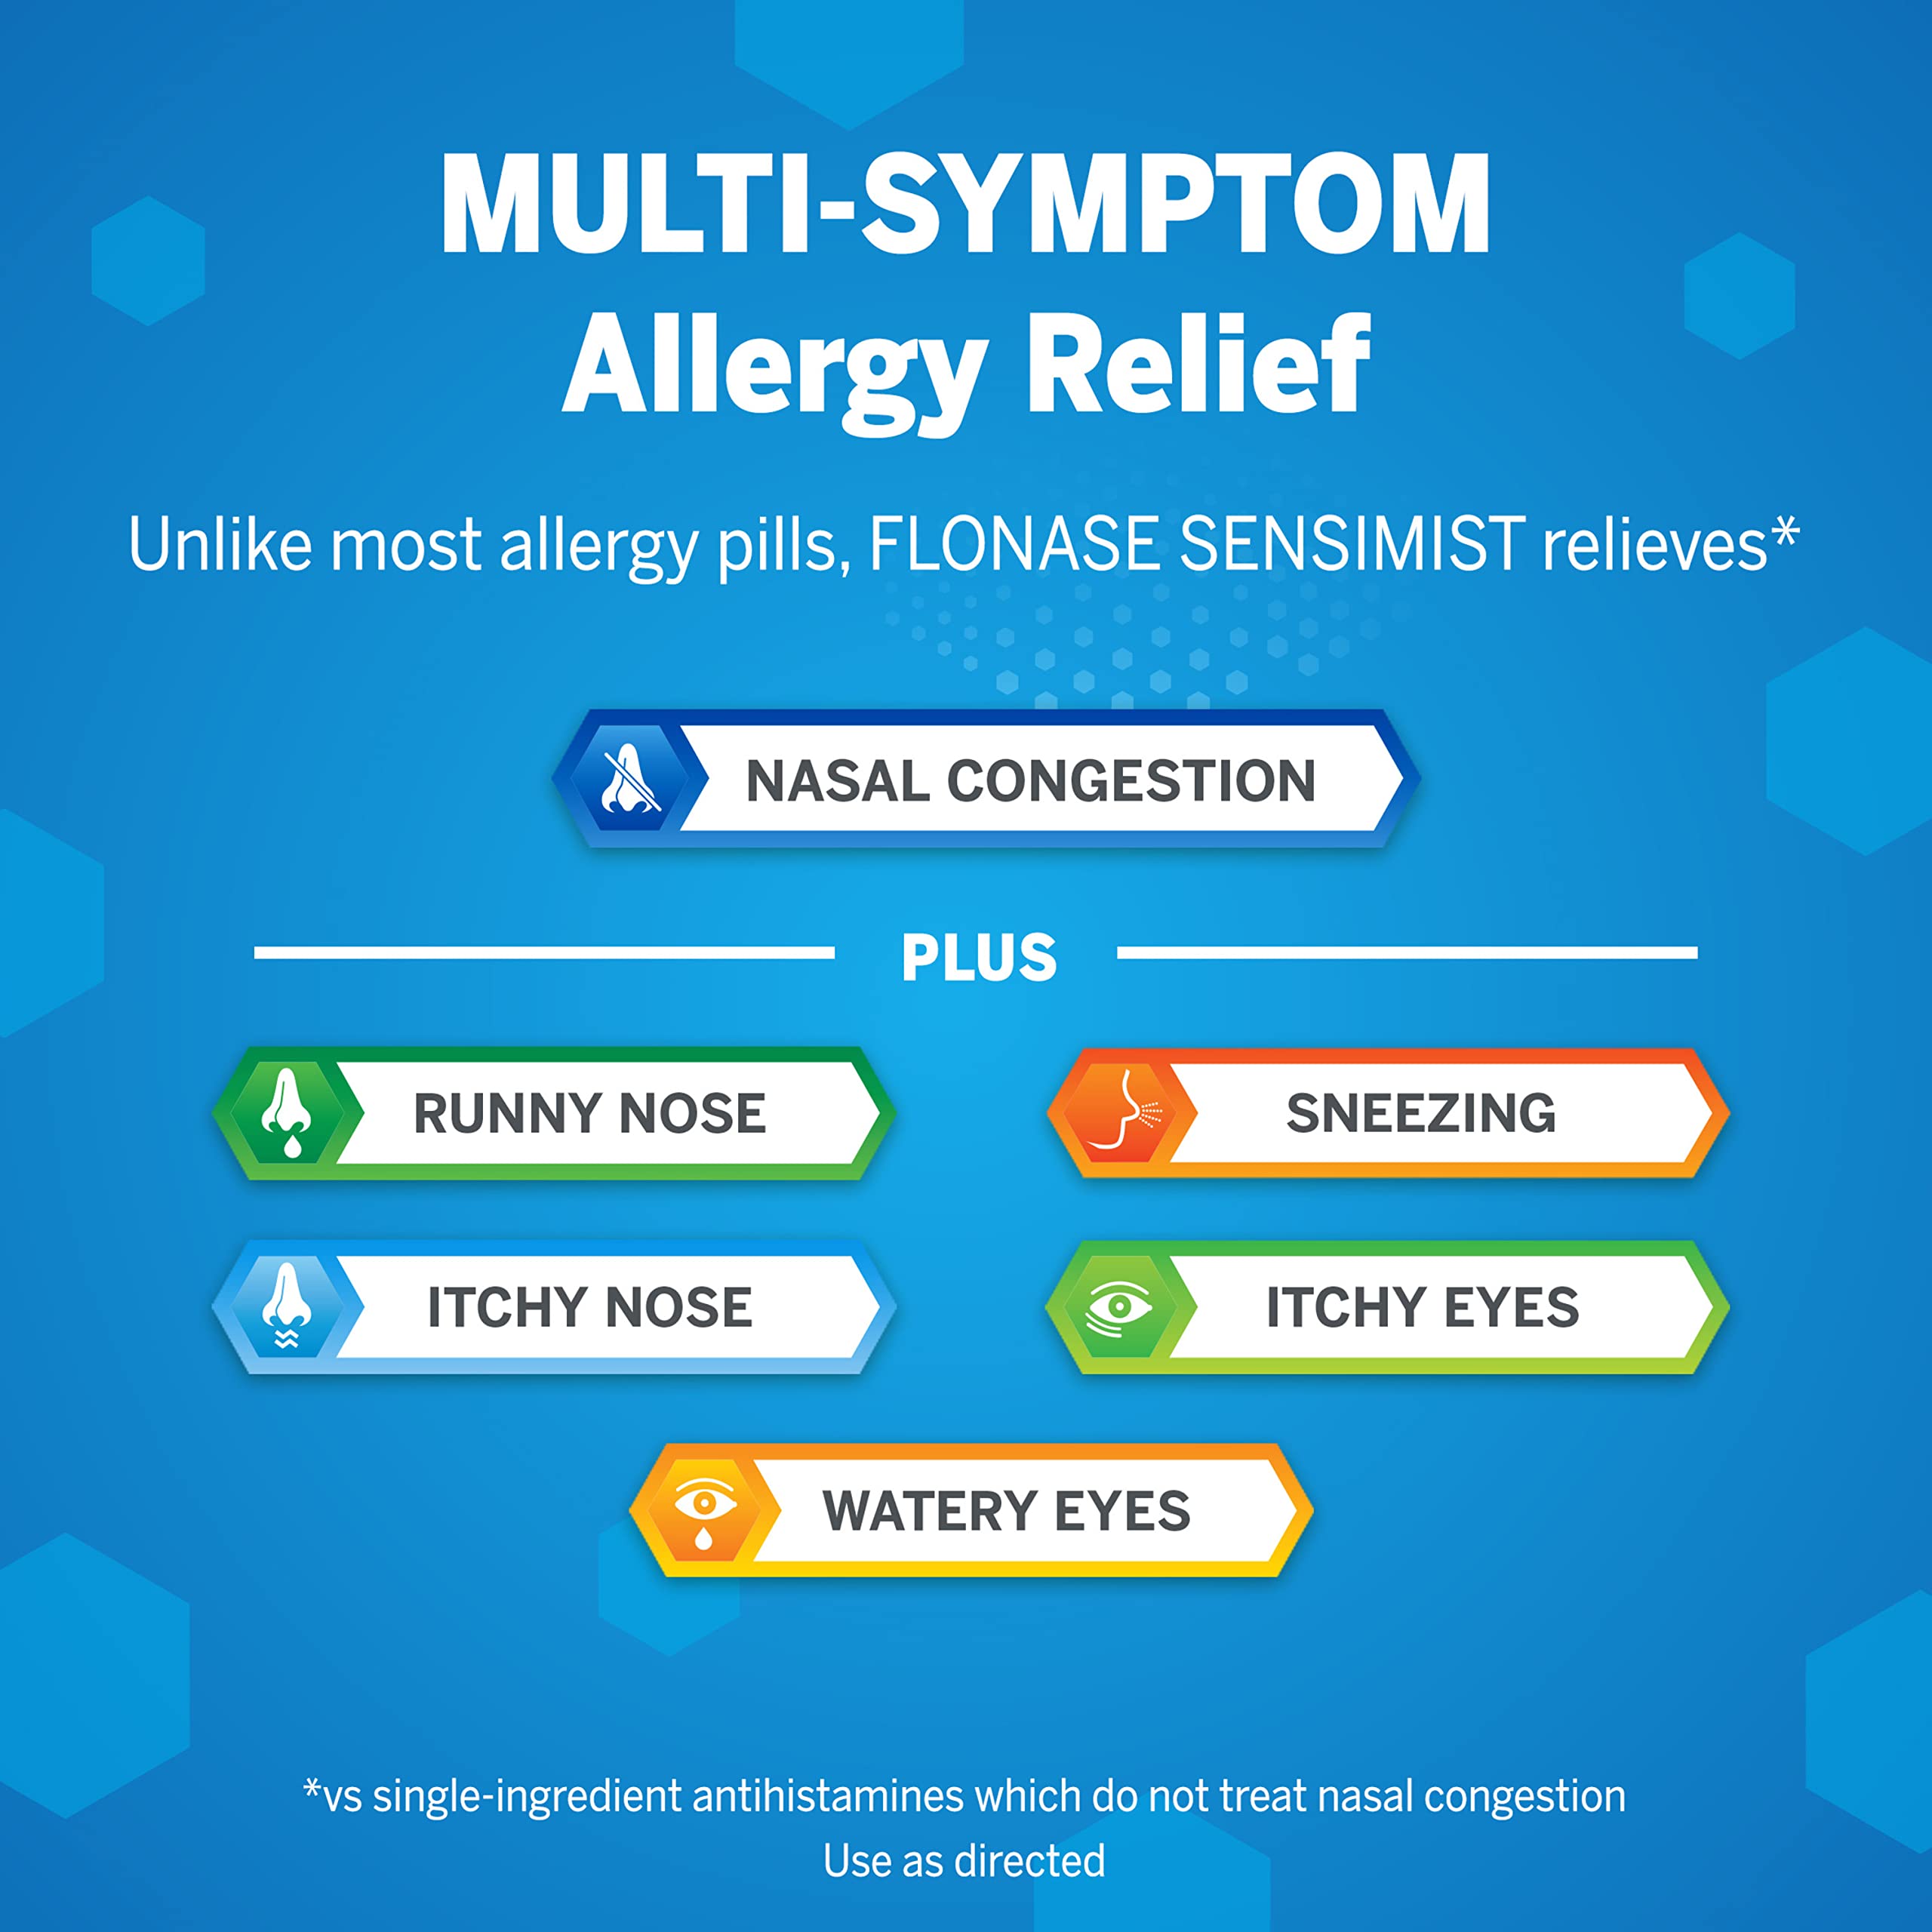 Flonase Sensimist Allergy Relief Nasal Spray Non Drowsy Allergy Medication, Gentle Mist - 120 Sprays